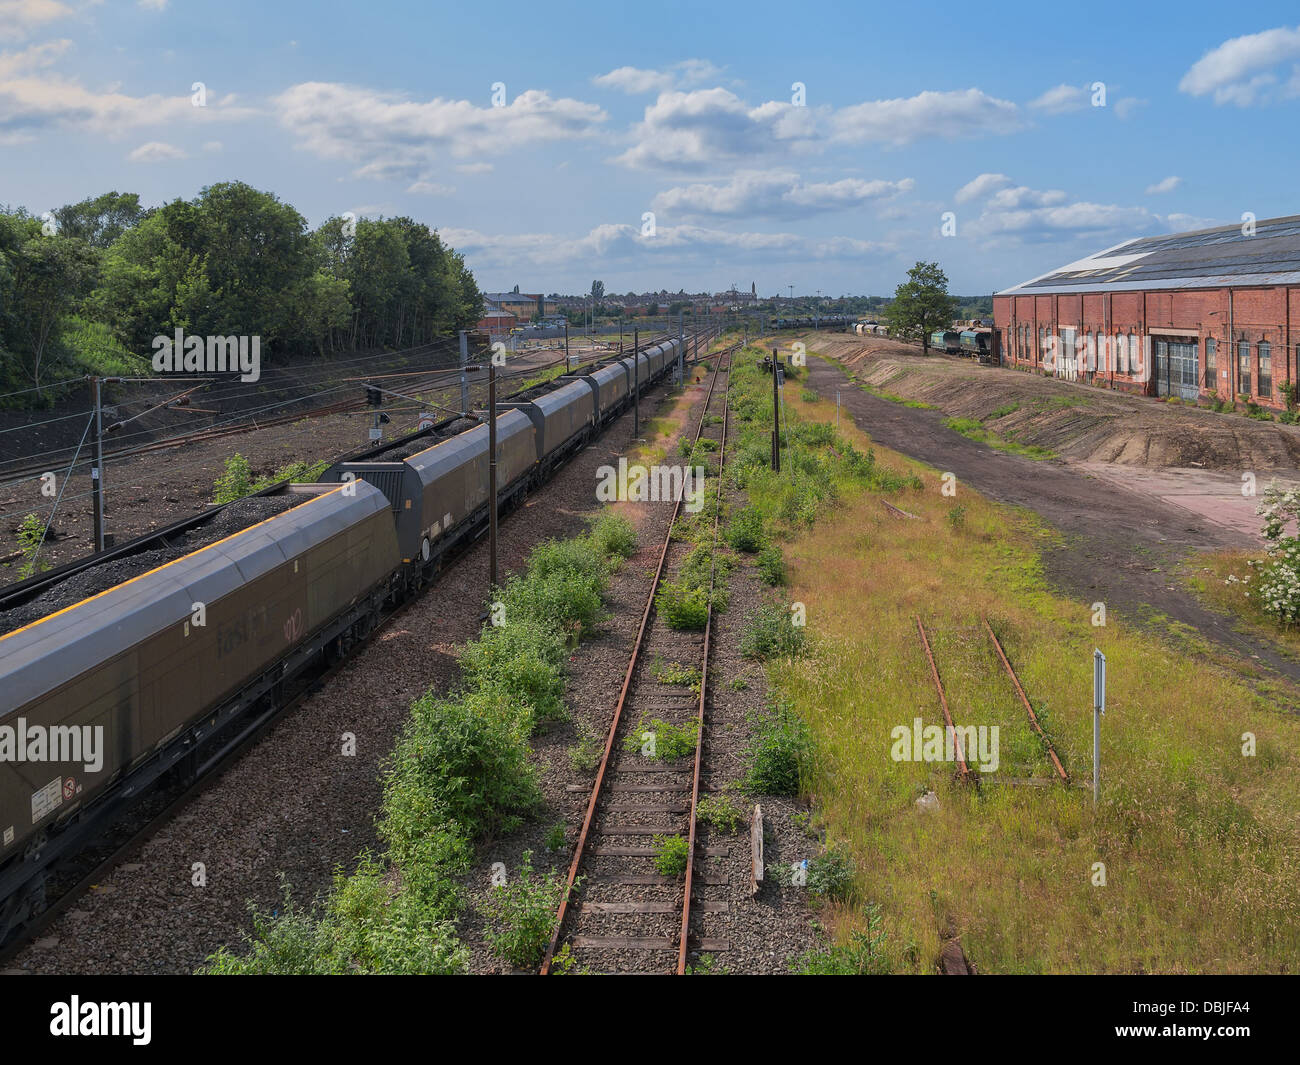 A freight train carrying coal makes its way through railway sidings near York Railway Station, UK. Stock Photo